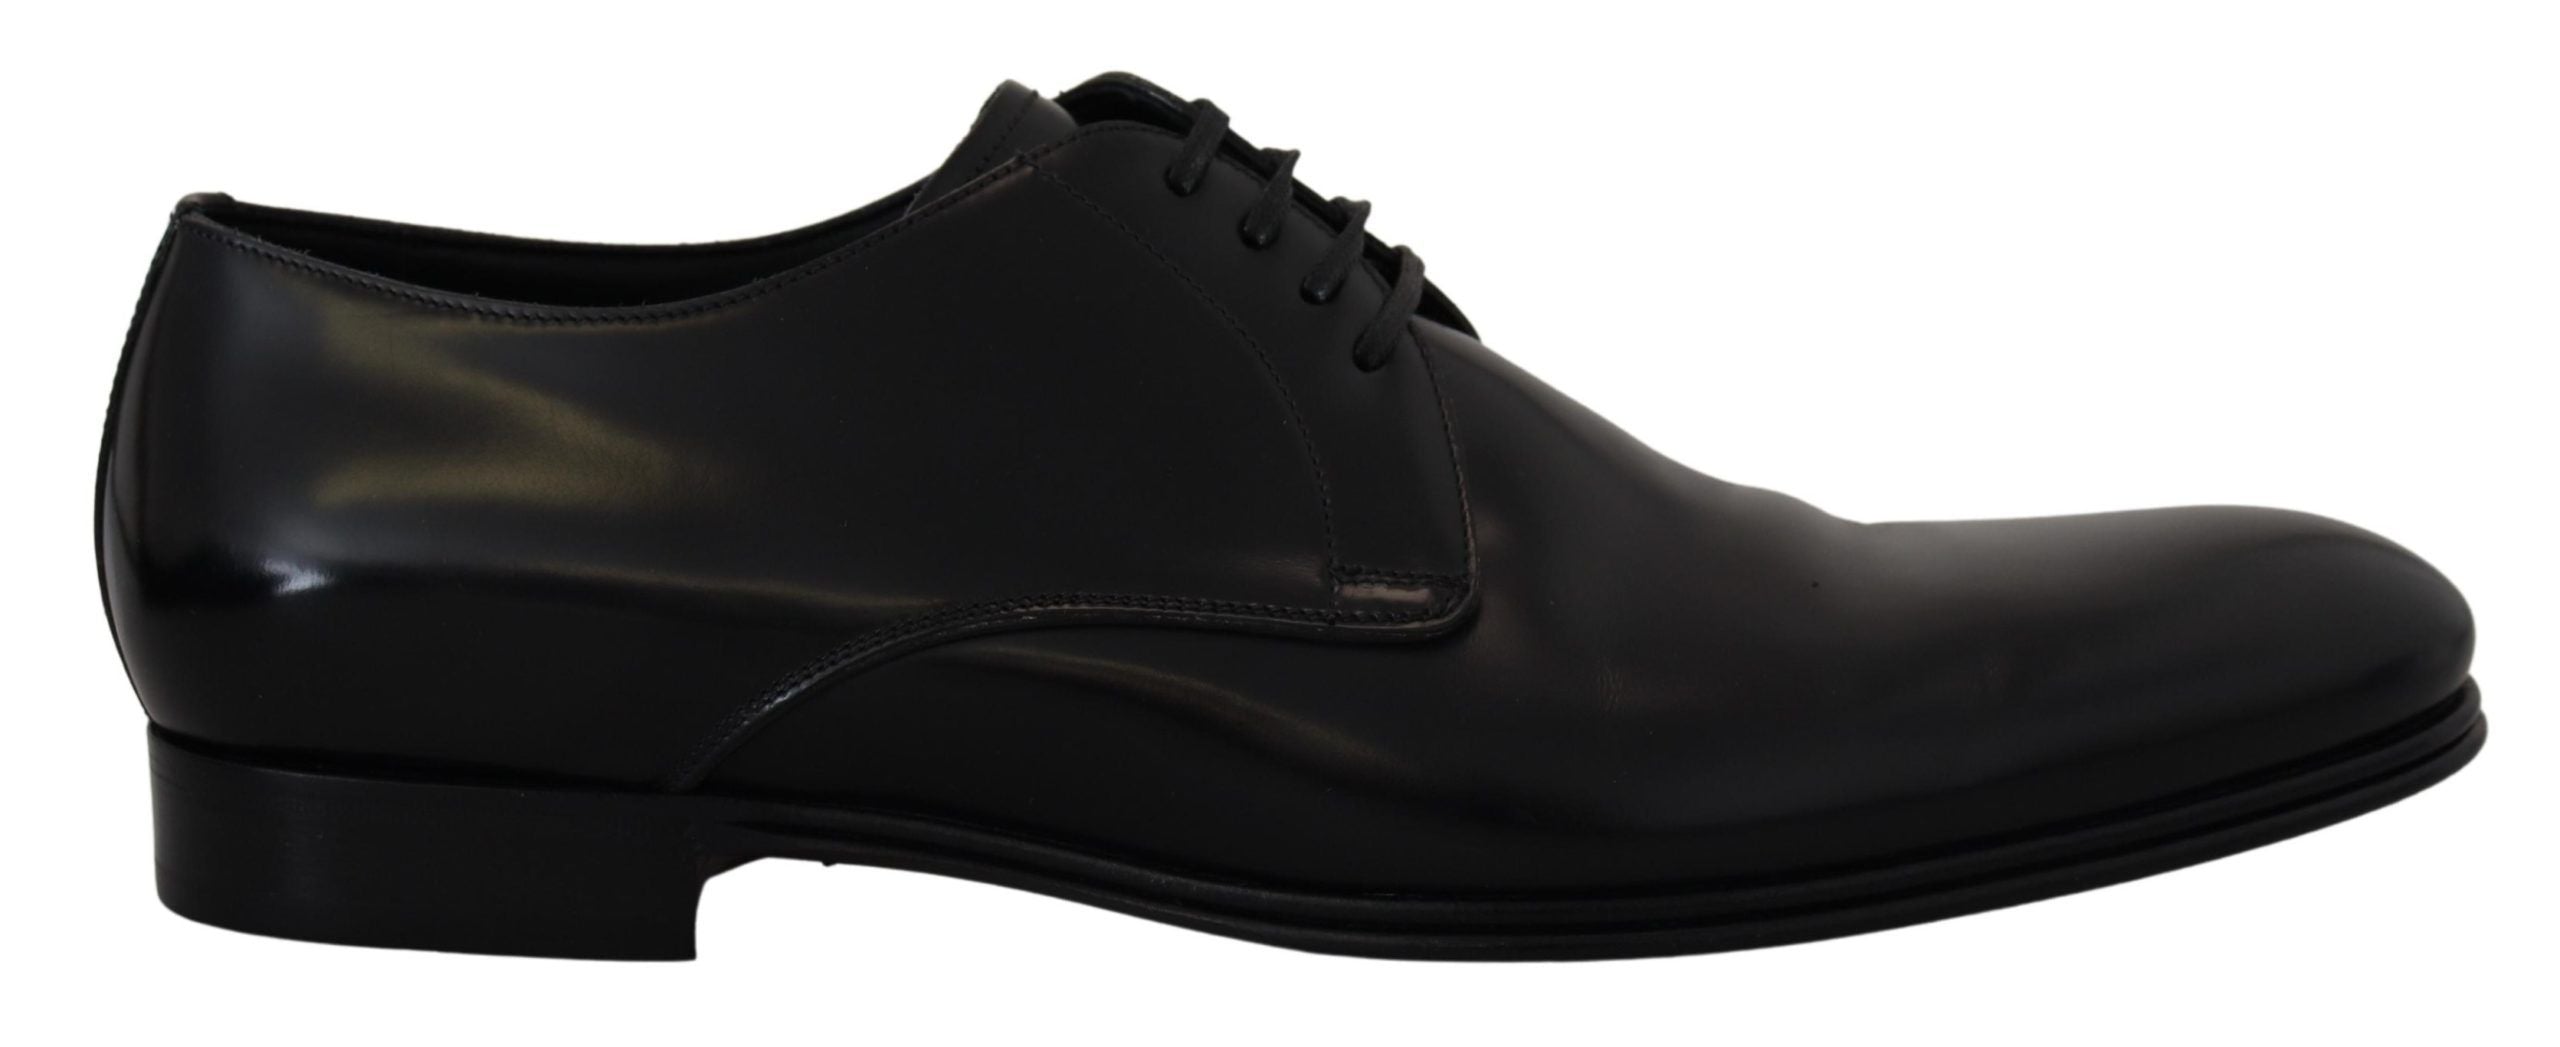 Elegant Black Leather Derby Shoes - Divitiae Glamour